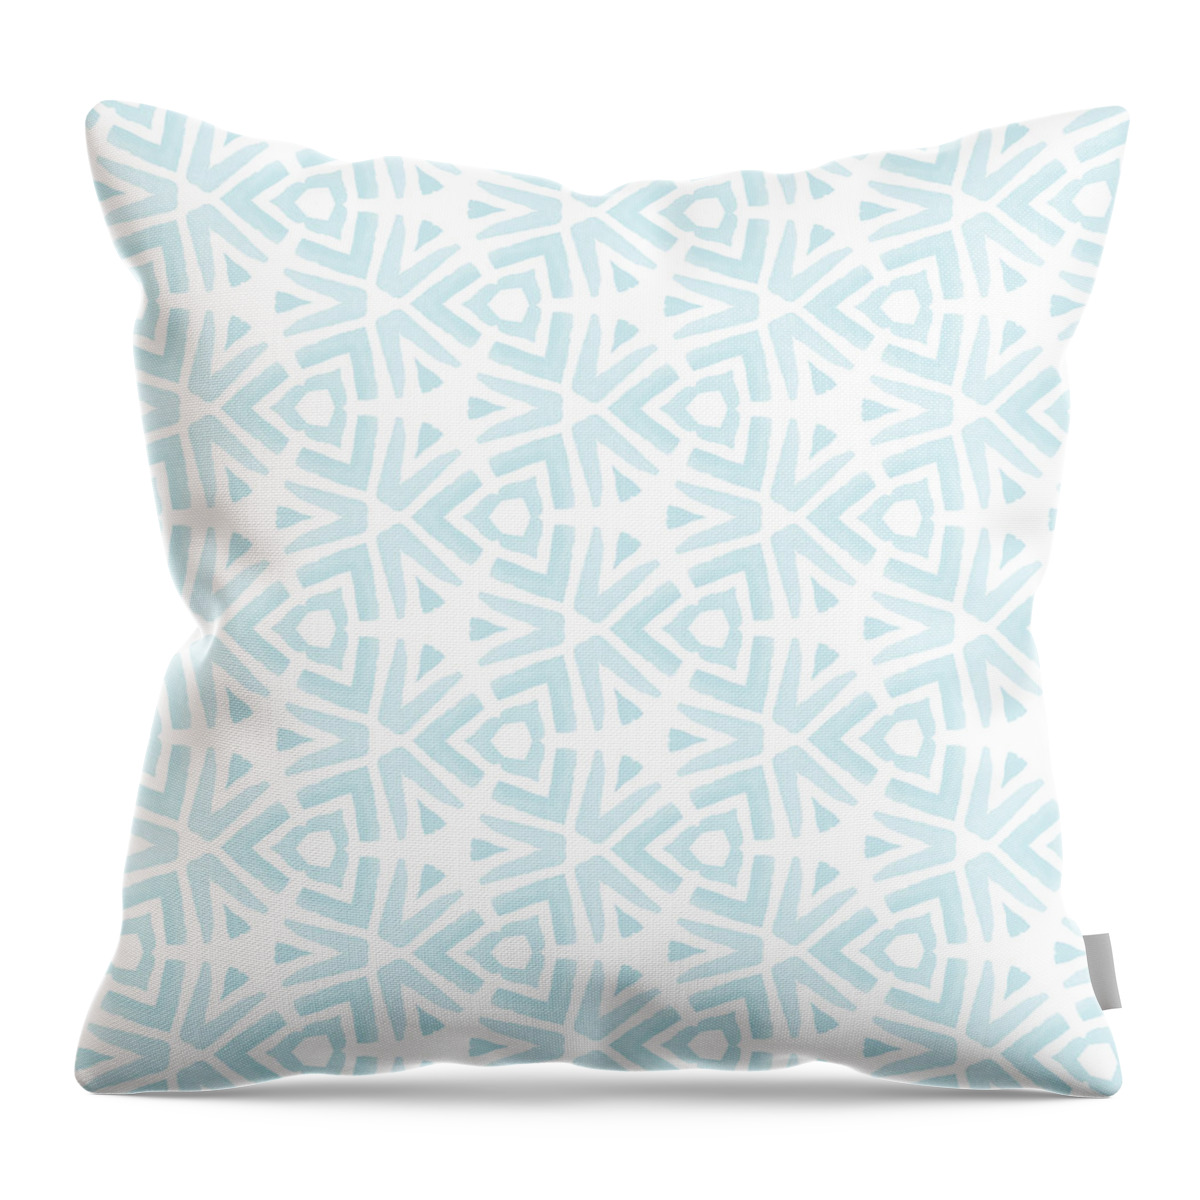 Pattern Throw Pillow featuring the digital art Summer Splash- Pattern Art by Linda Woods by Linda Woods